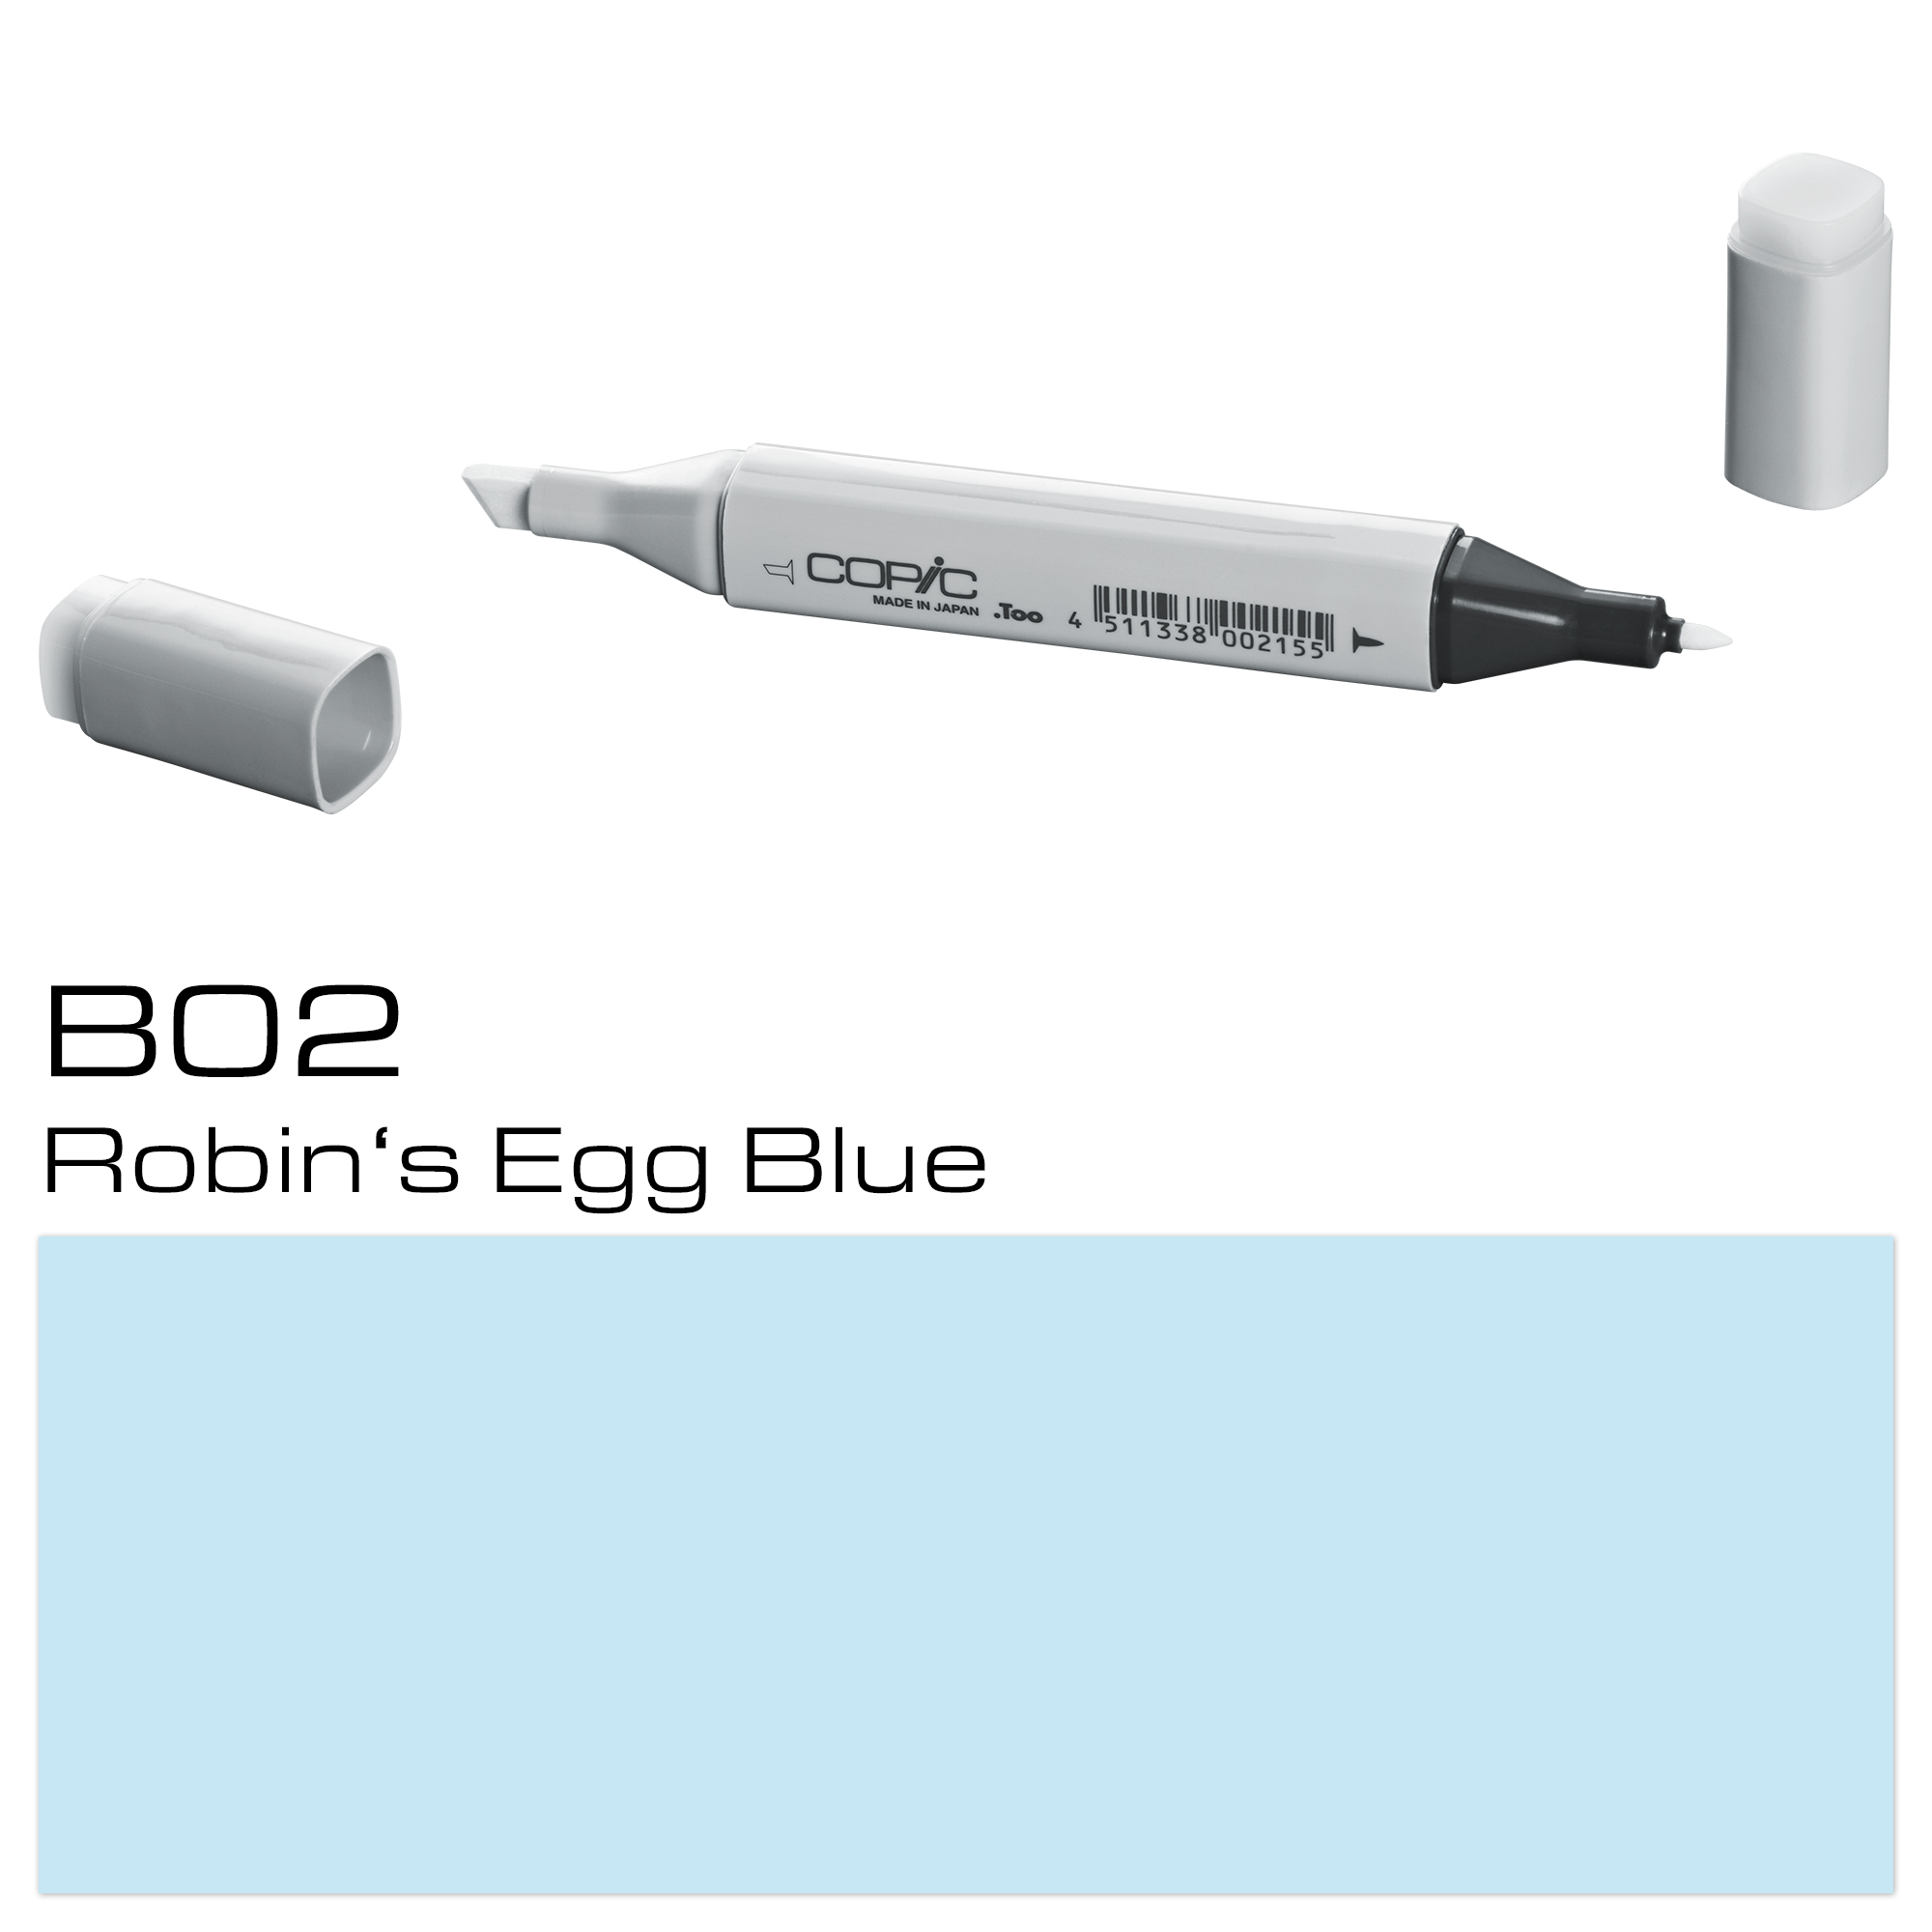 COPIC MARKER ROBINS EGG BLUE B02